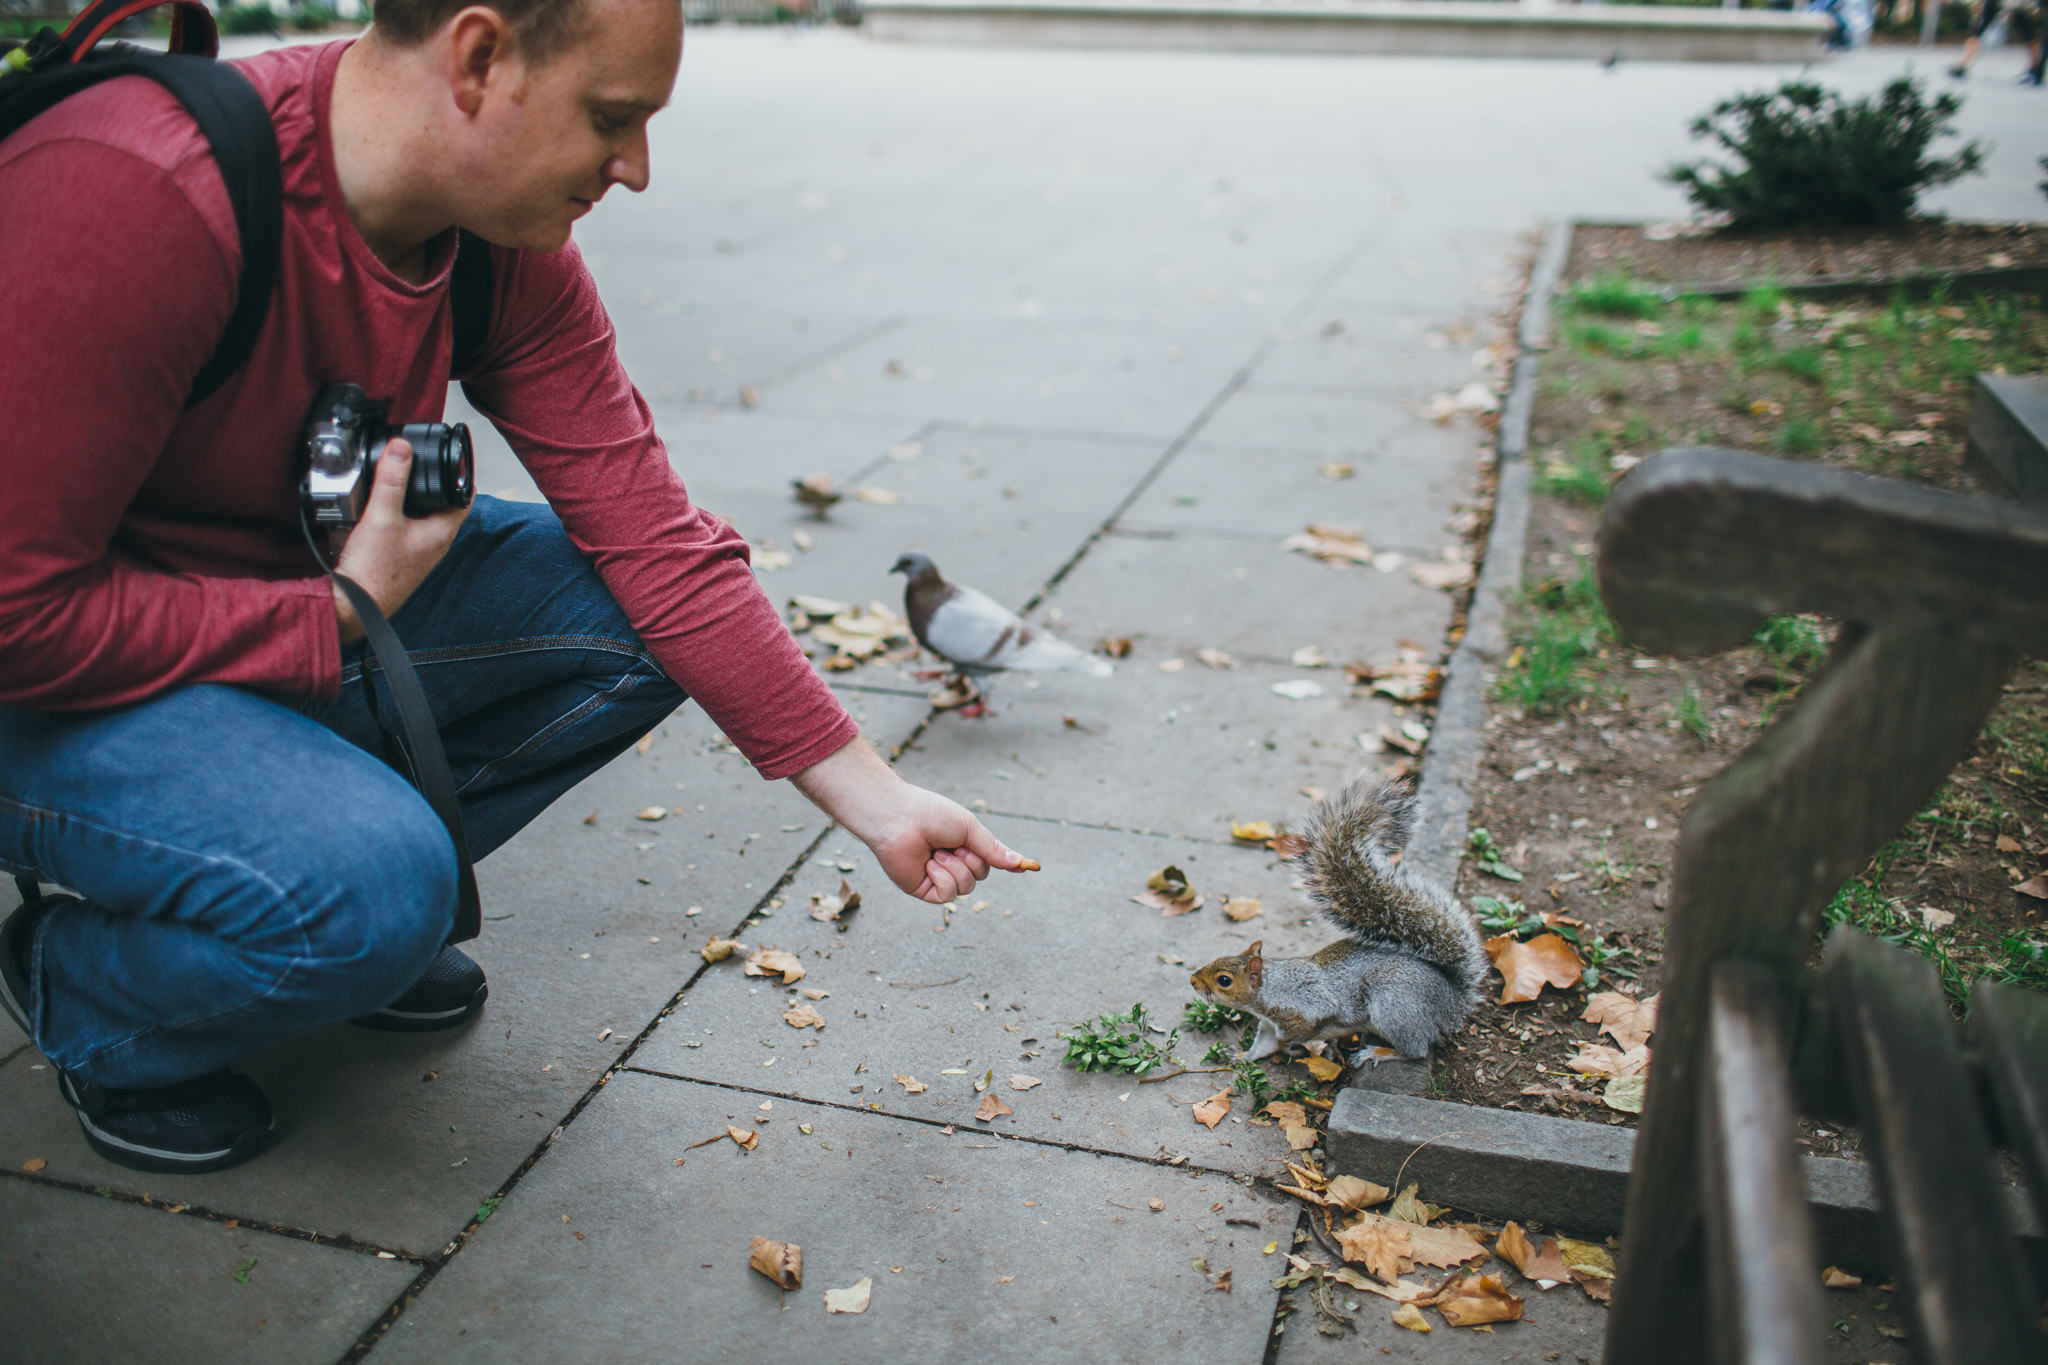 Man feeds nut to a squirrel